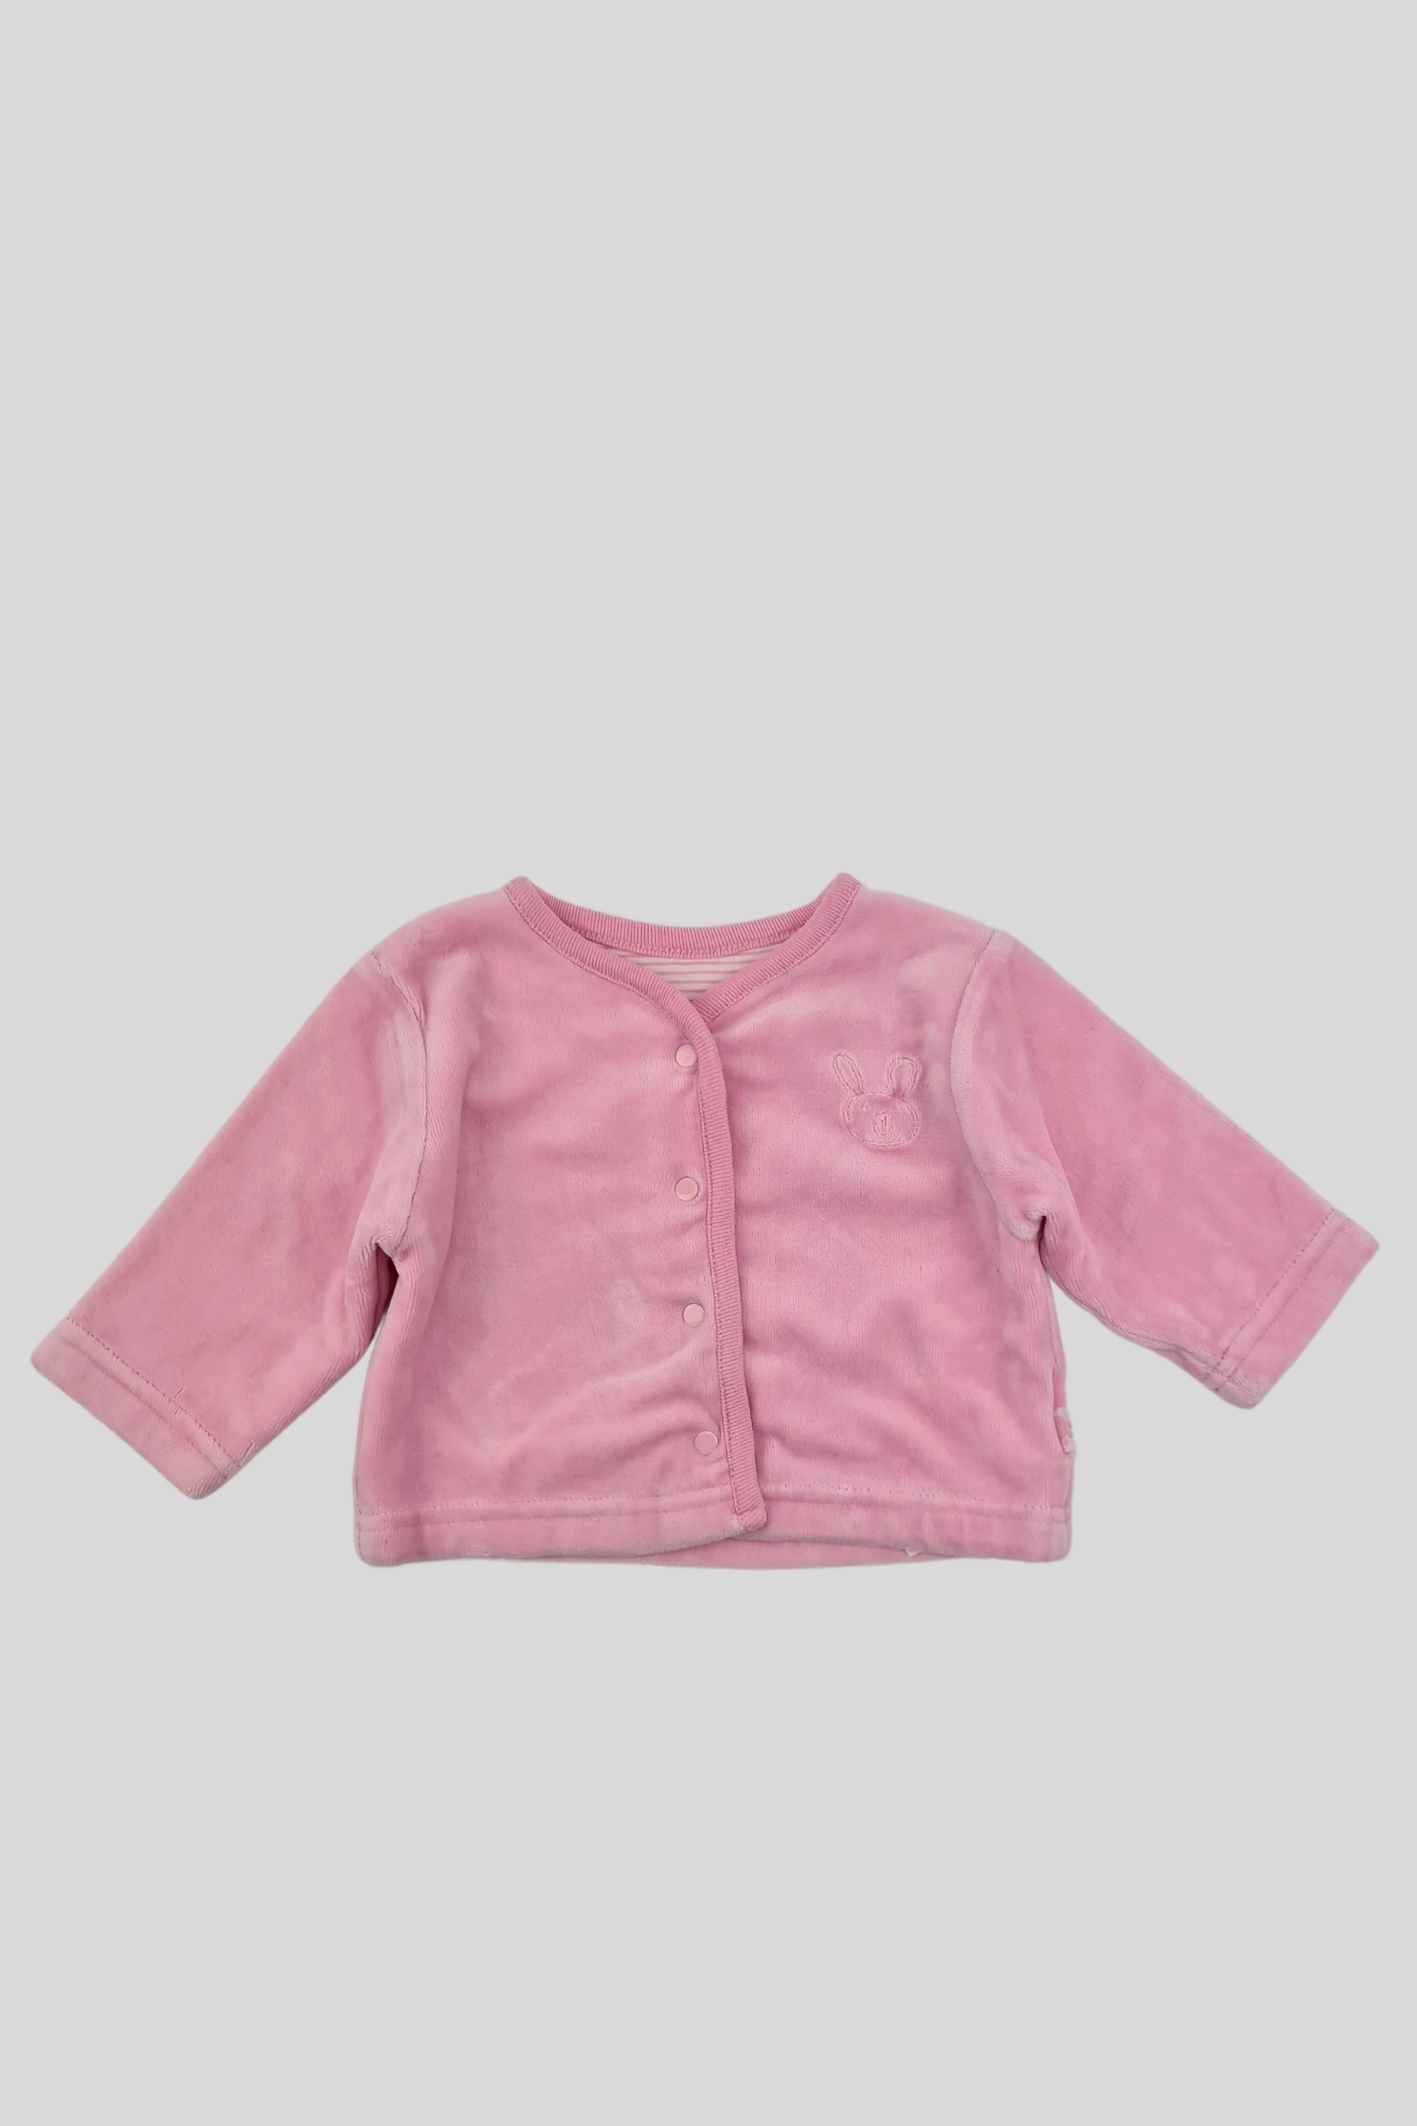 Newborn - 10lbs Pink Button Up Jacket (Mothercare)